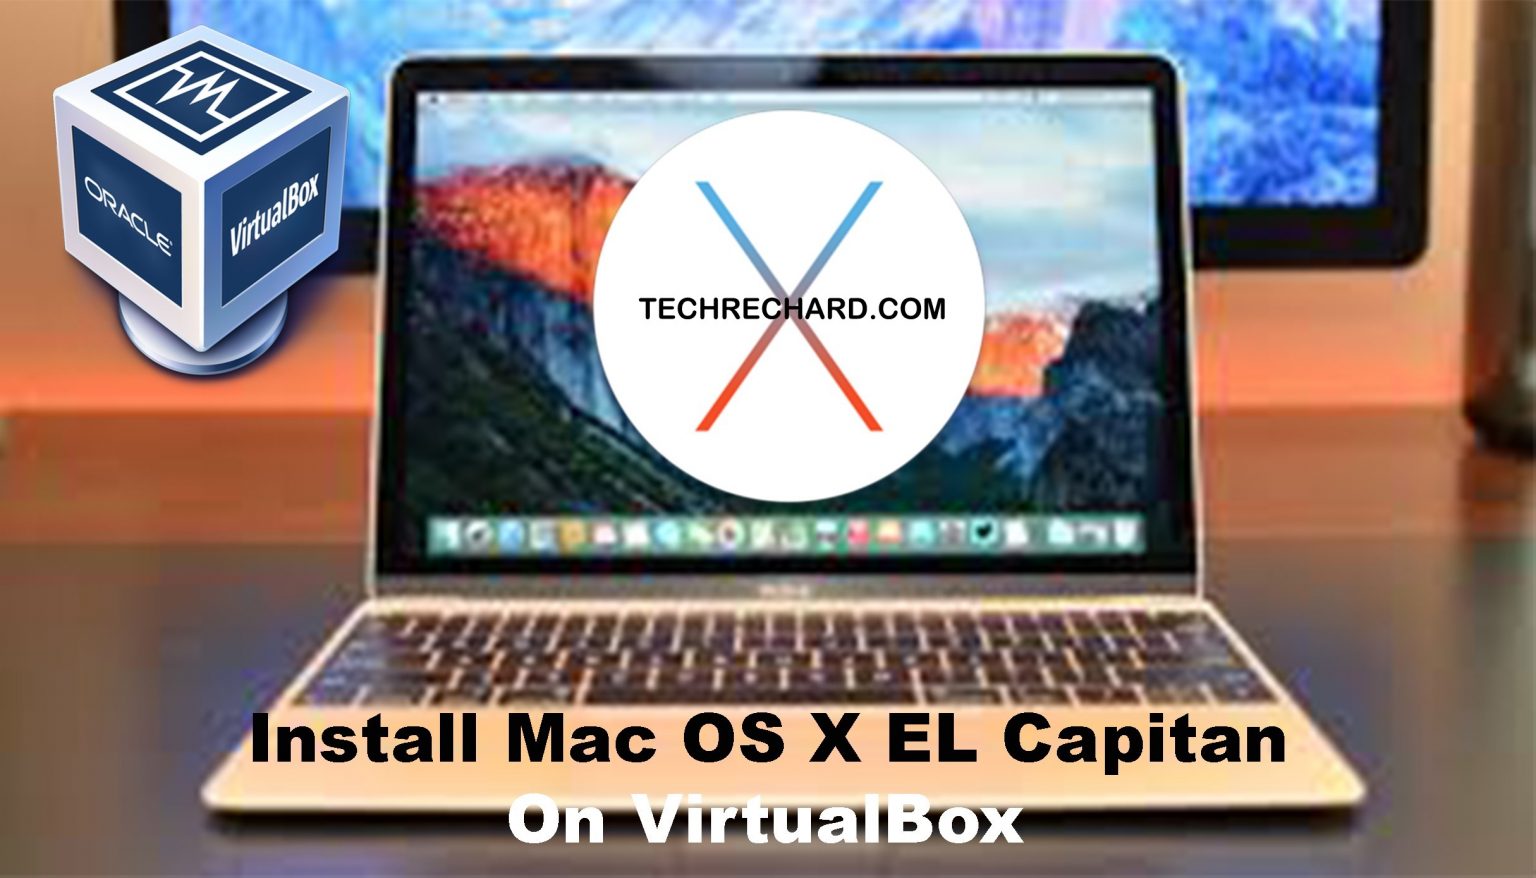 mac os x el capitan iso file download for virtul machine